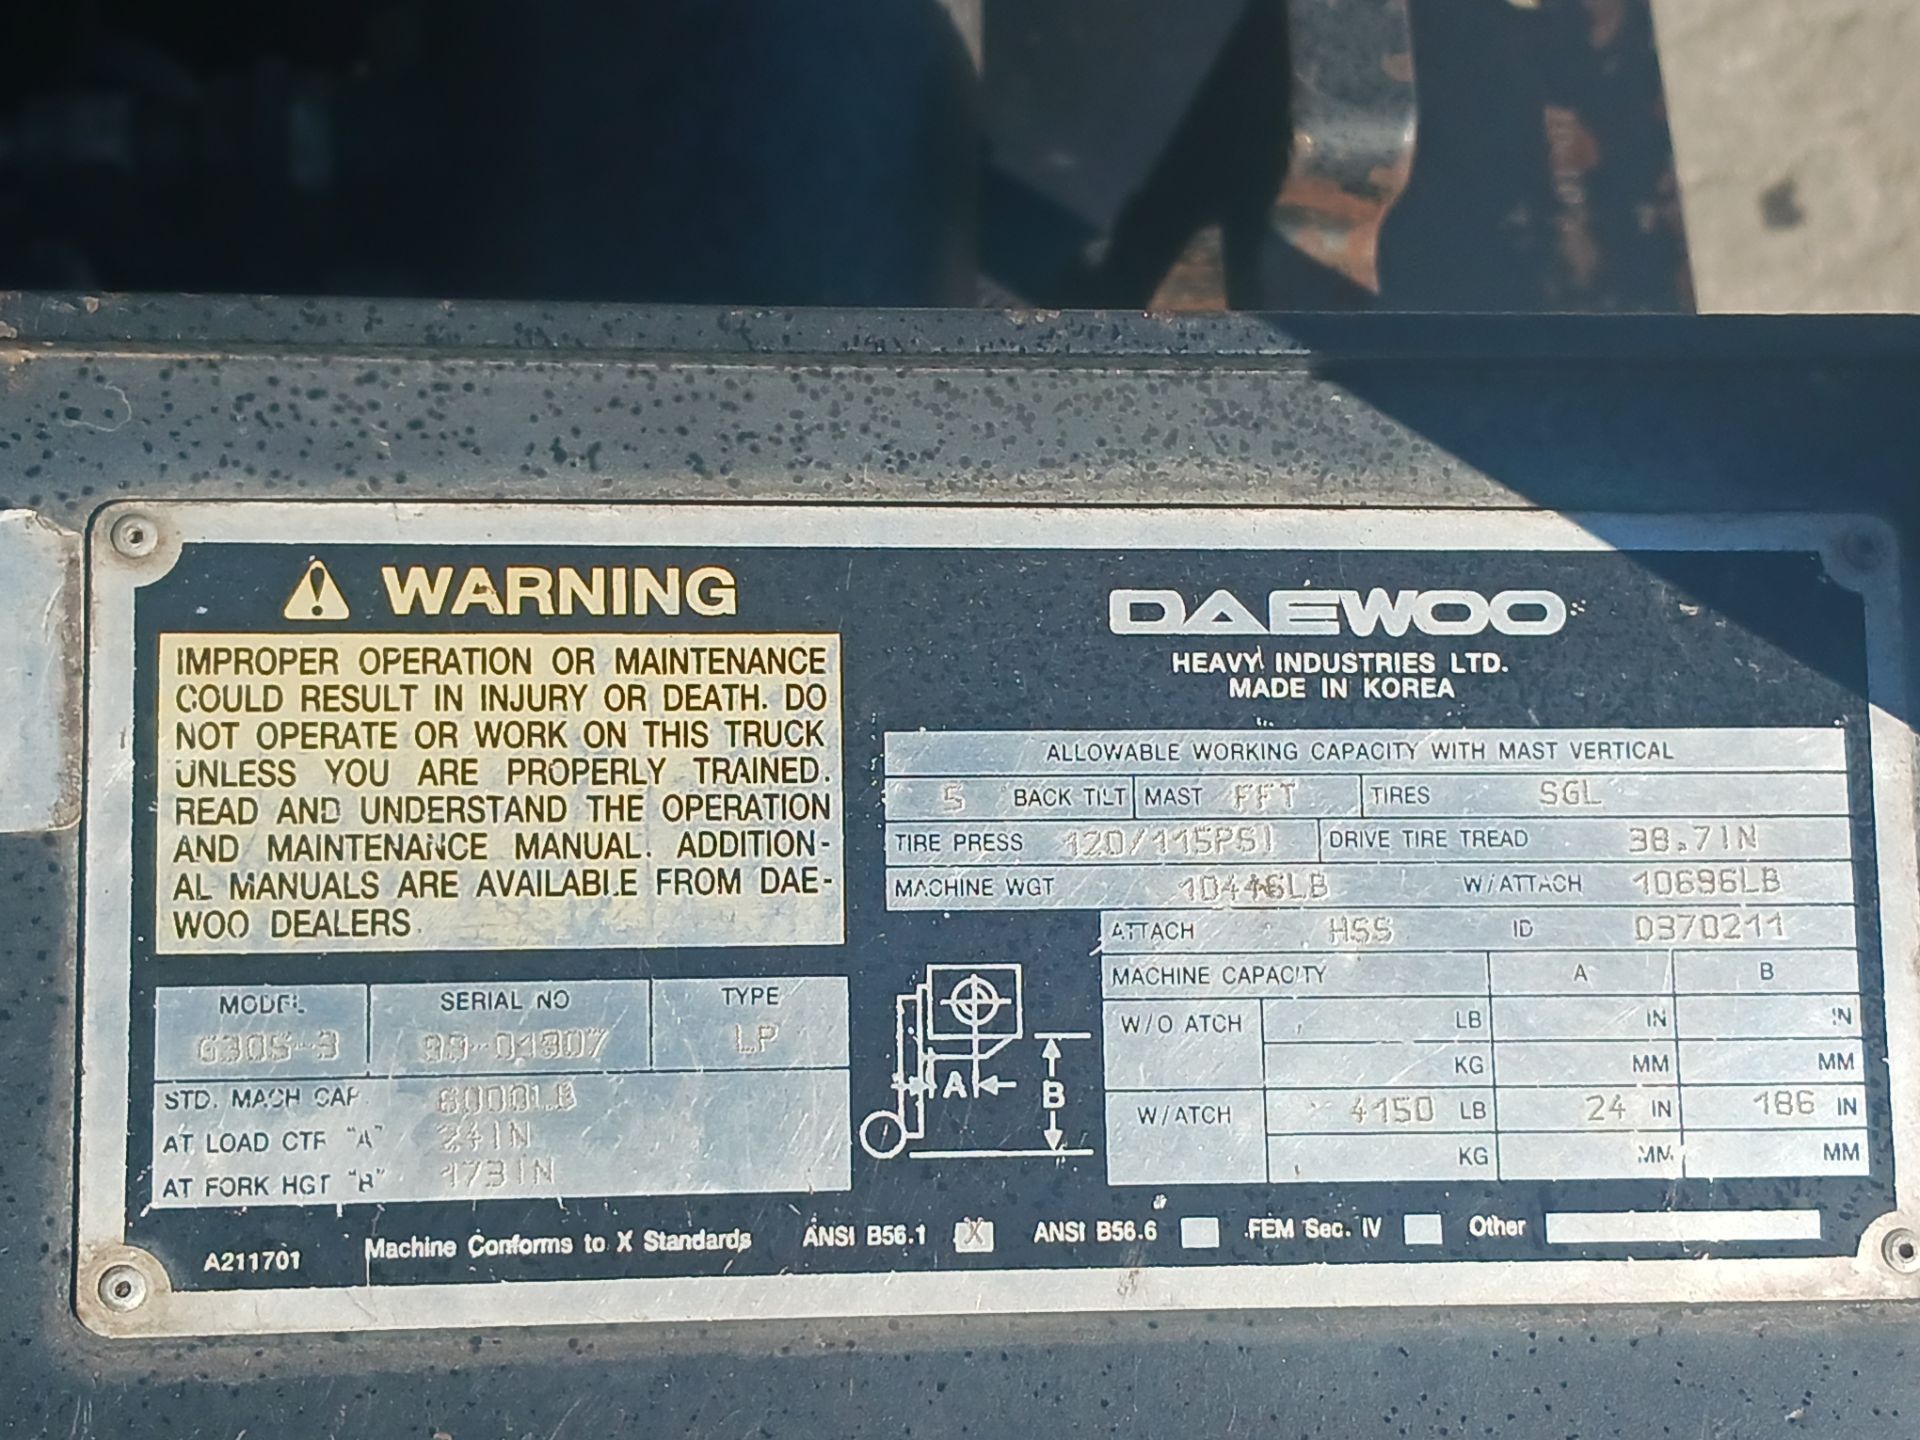 Daewoo G30S-3 6,000lb Forklift - Image 18 of 18